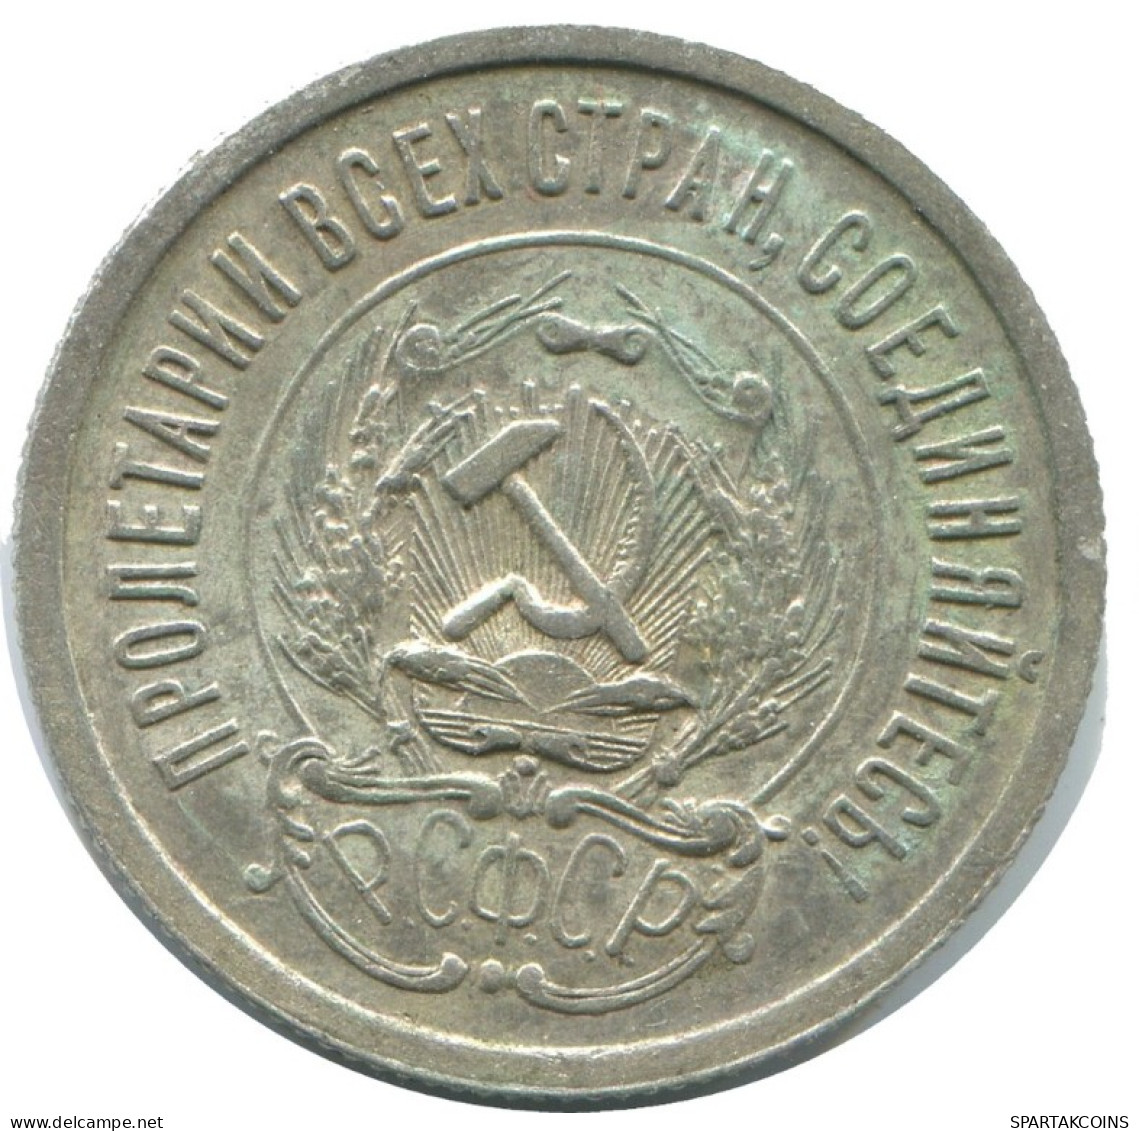 20 KOPEKS 1923 RUSSIA RSFSR SILVER Coin HIGH GRADE #AF690.U.A - Russie